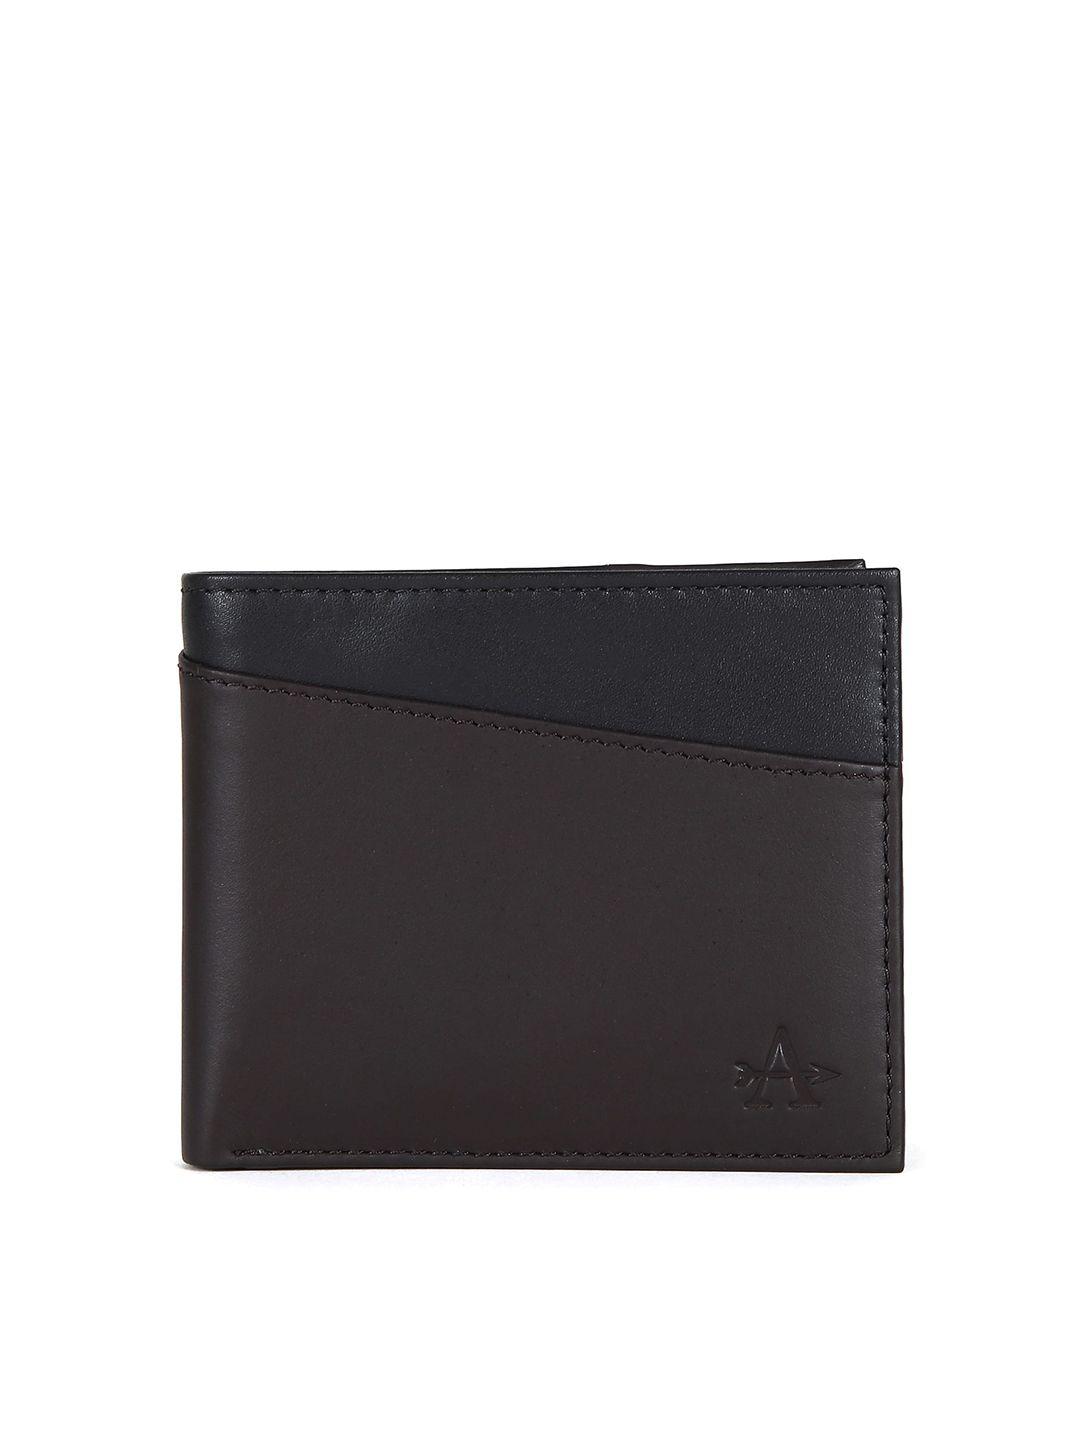 arrow men brown leather wallet